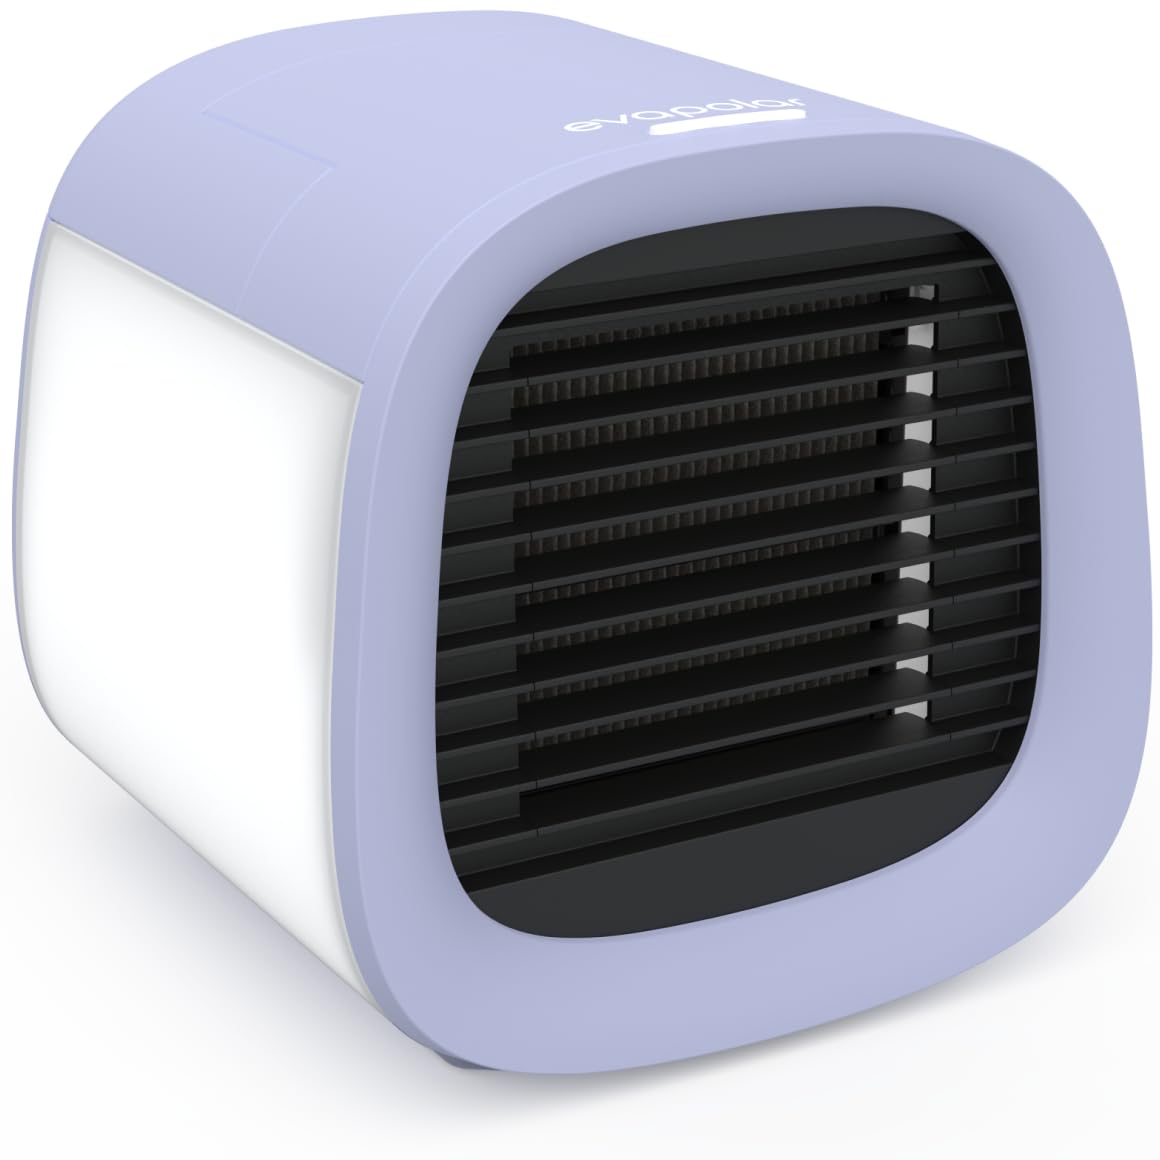 Evapolar evaCHILL Personal Evaporative Air Cooler and Humidifier, Portable Air Conditioner, Desktop Cooling Fan